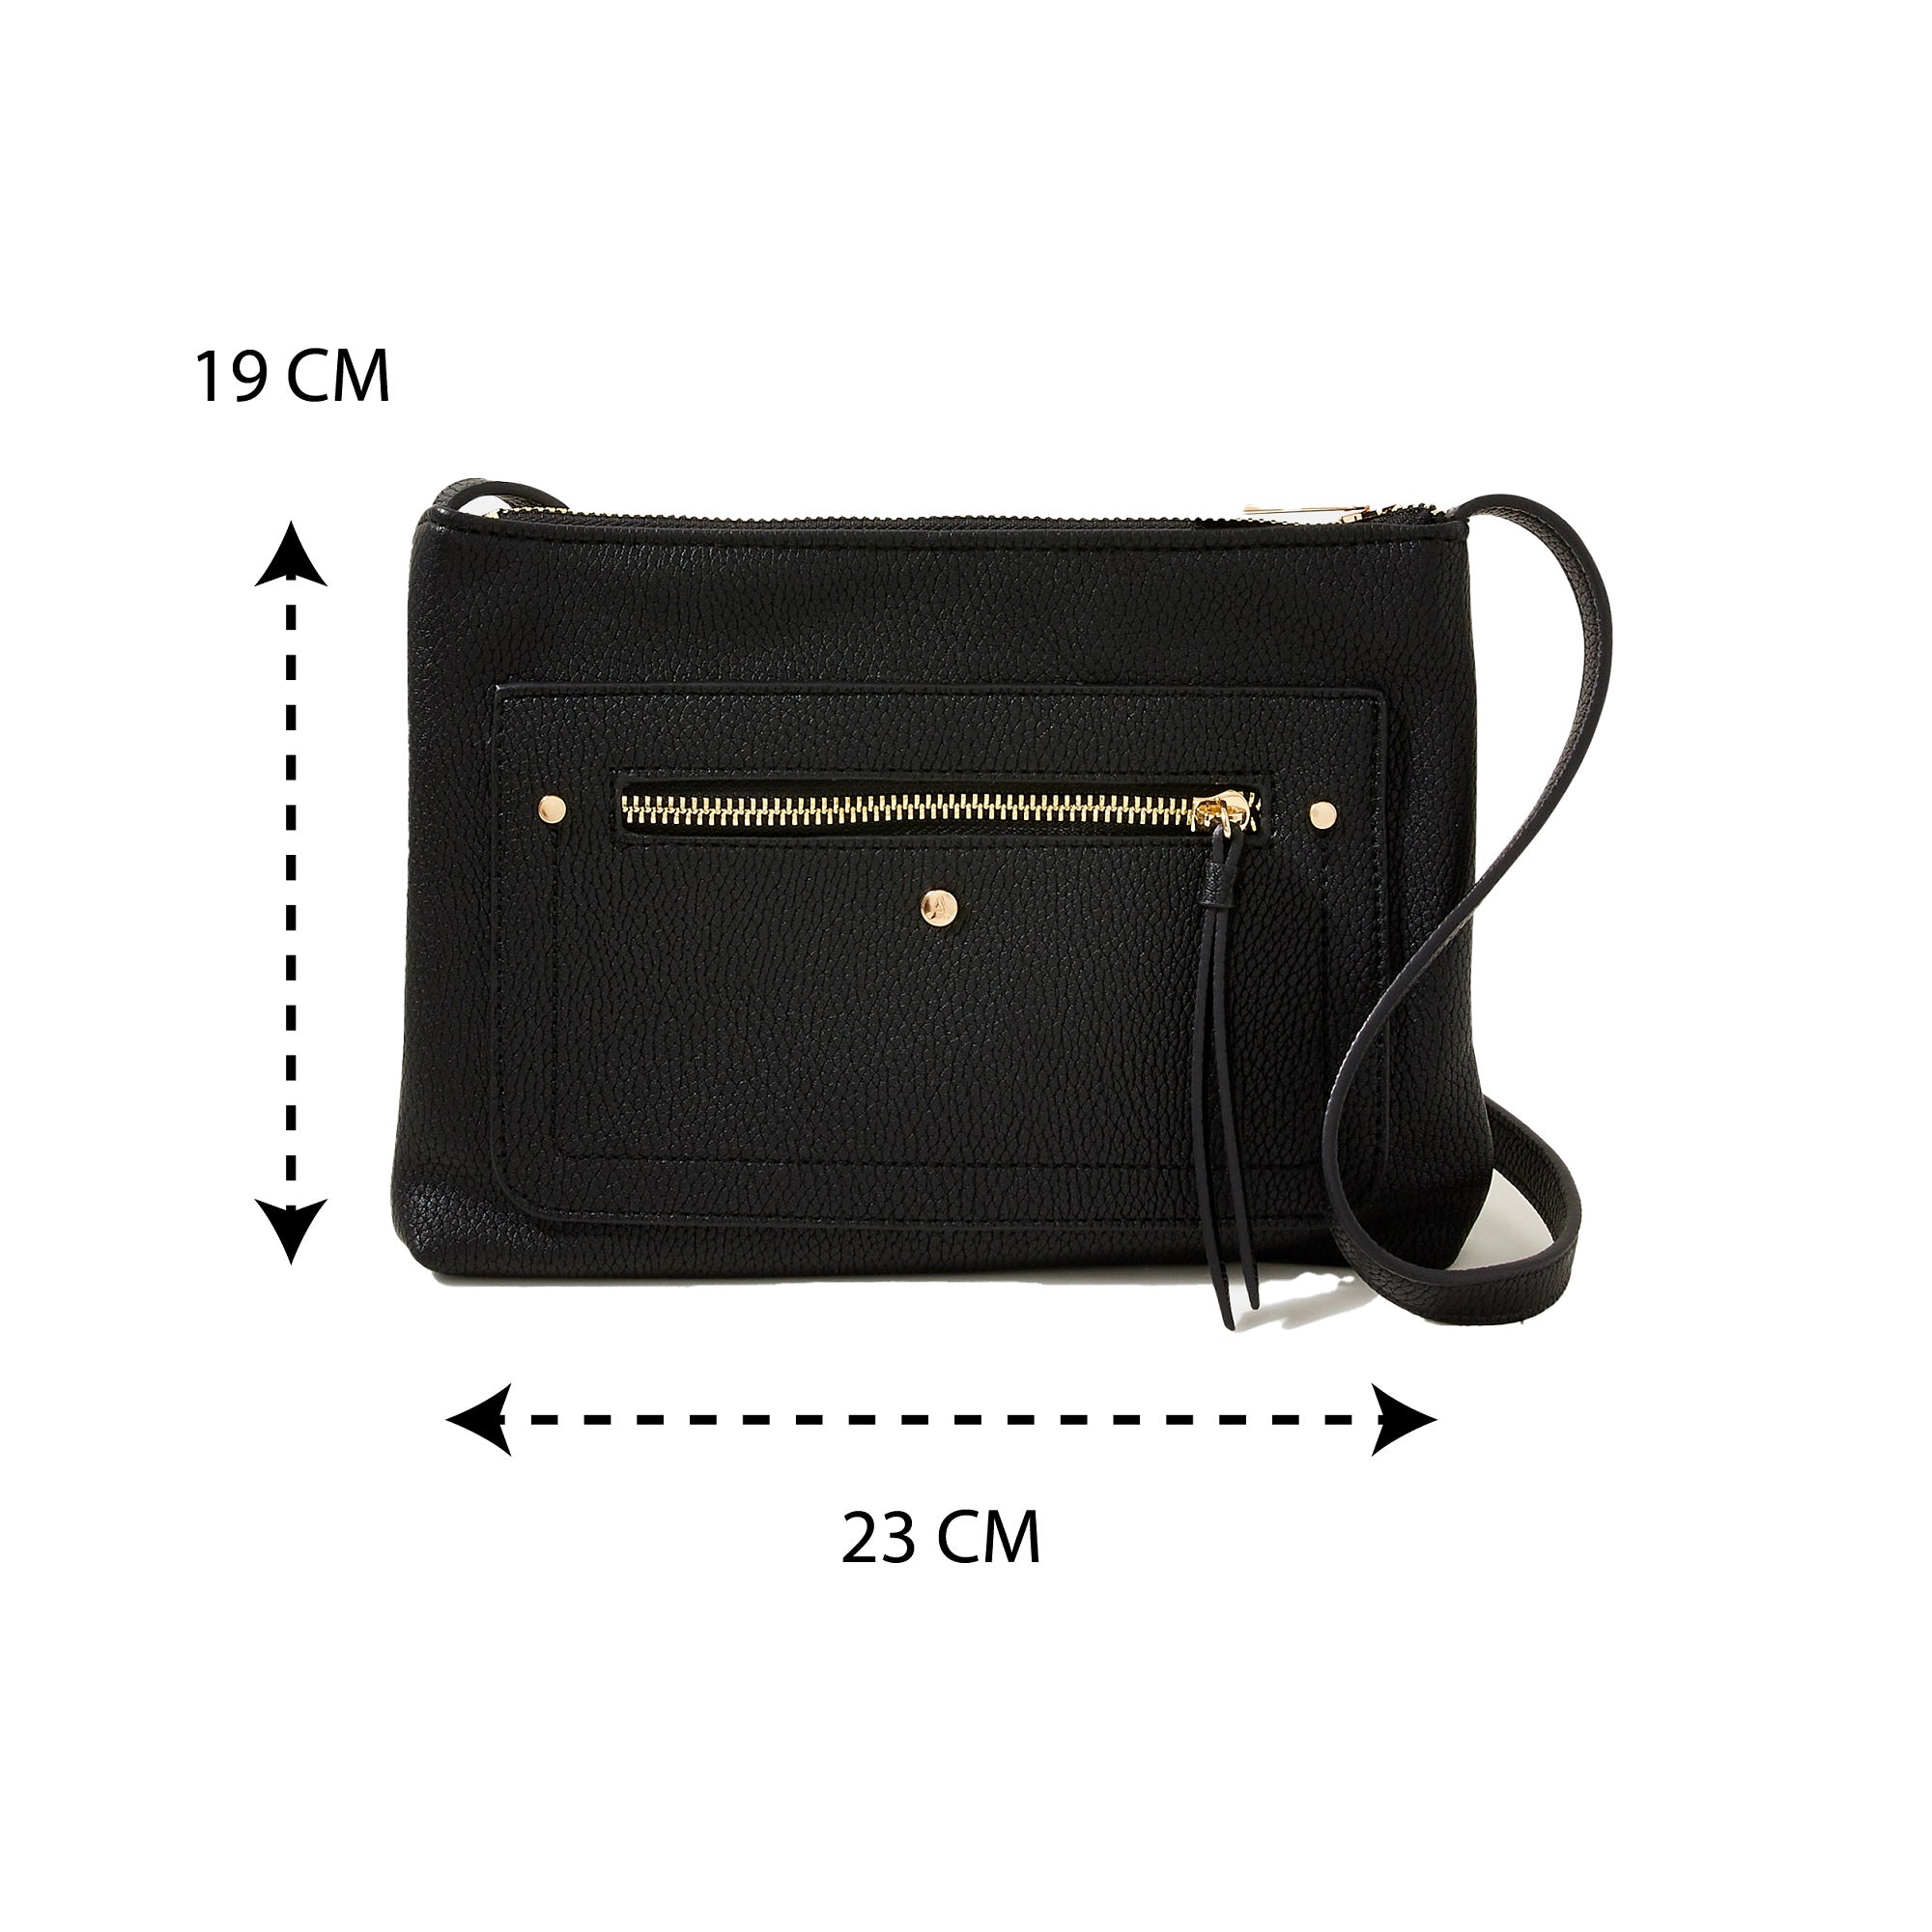 Accessorize London women's Faux Leather Black Mini Purse Sling Bag